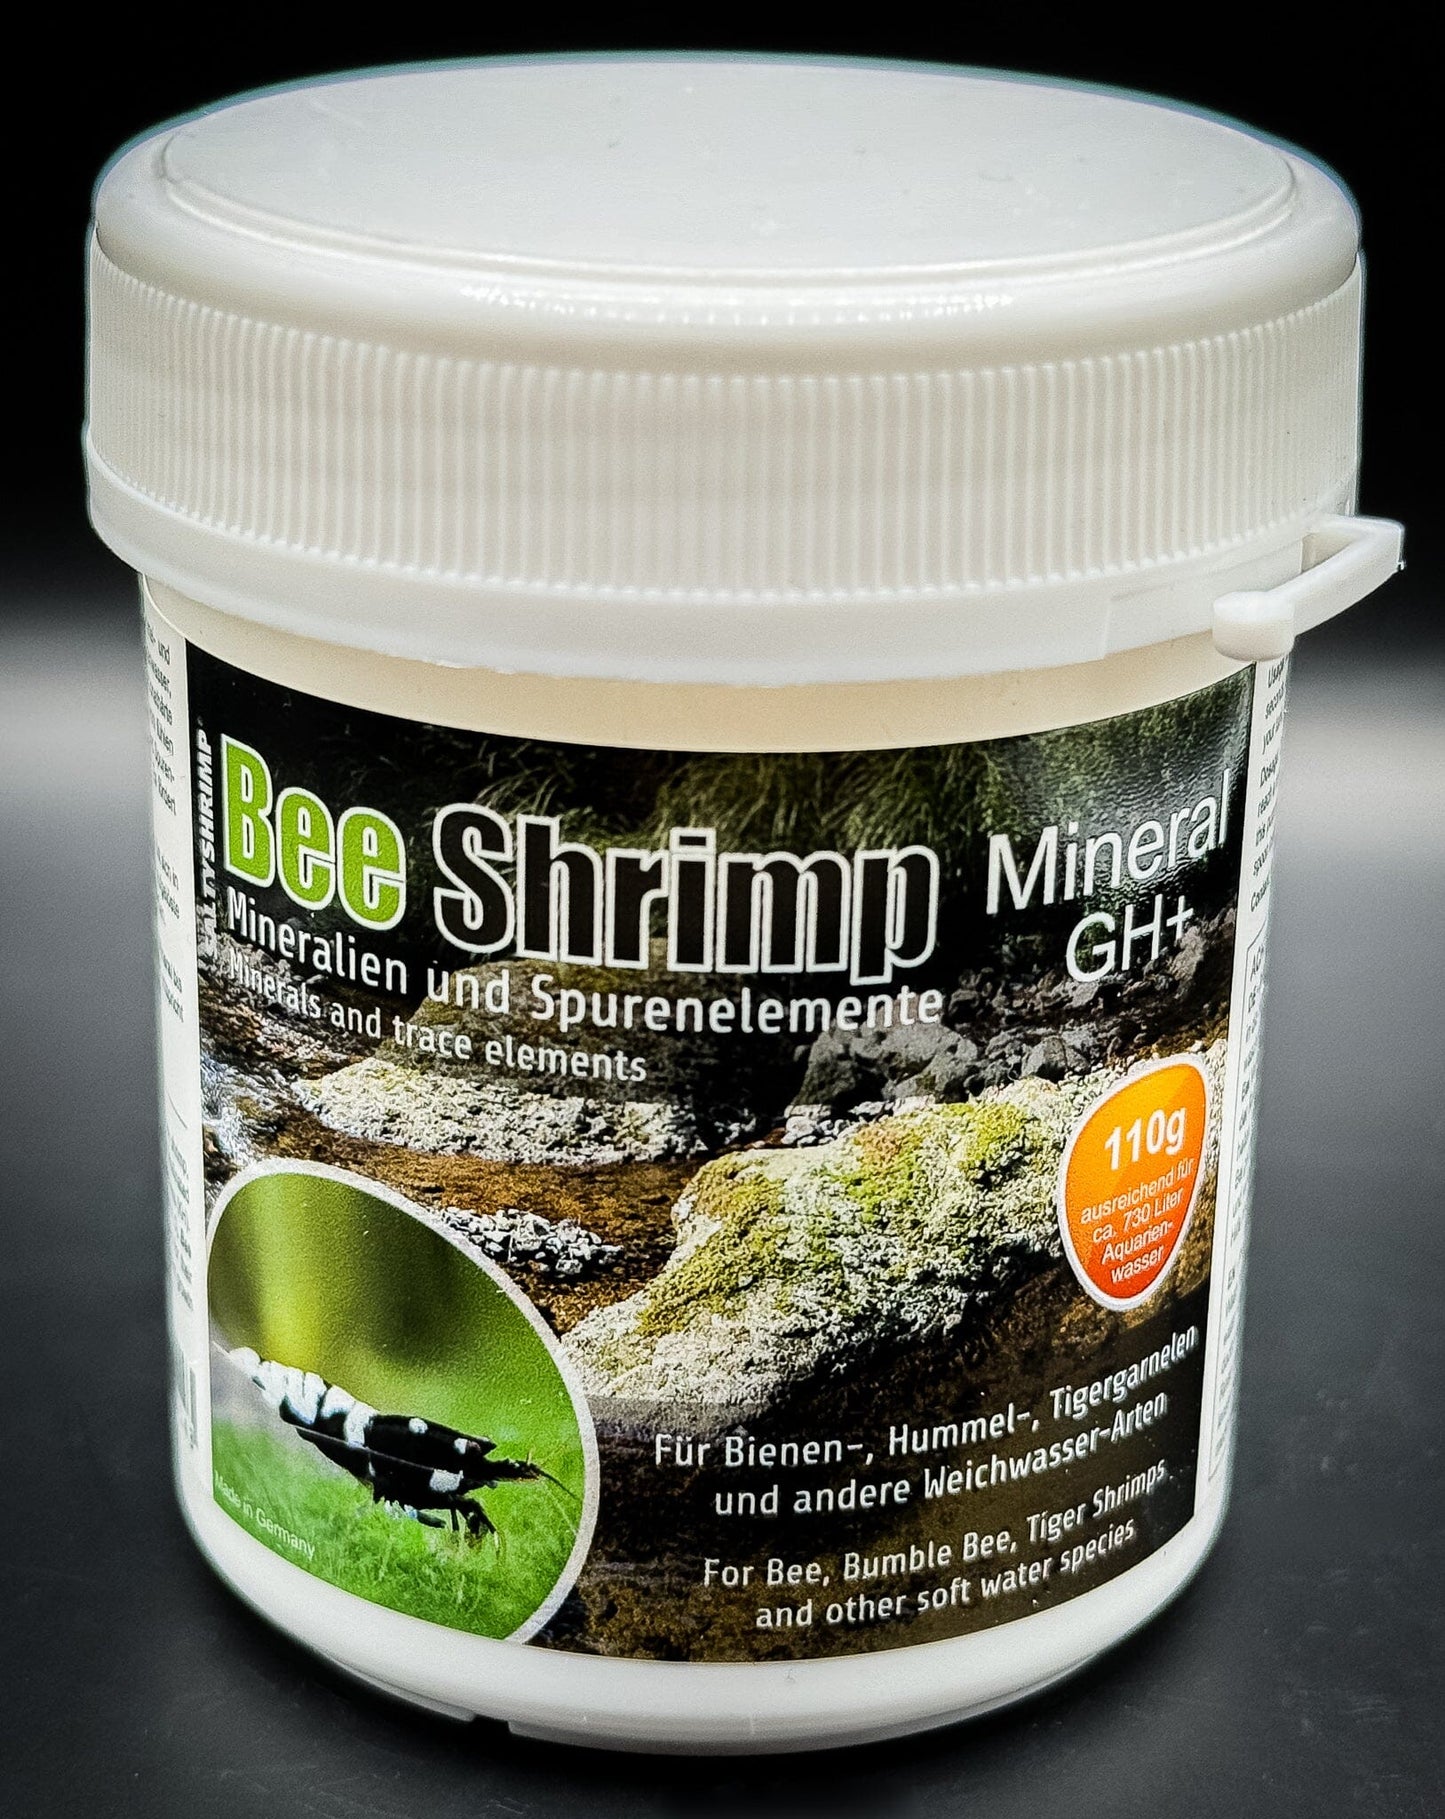 SaltyShrimp Bee Shrimp Mineral GH+ 110 g